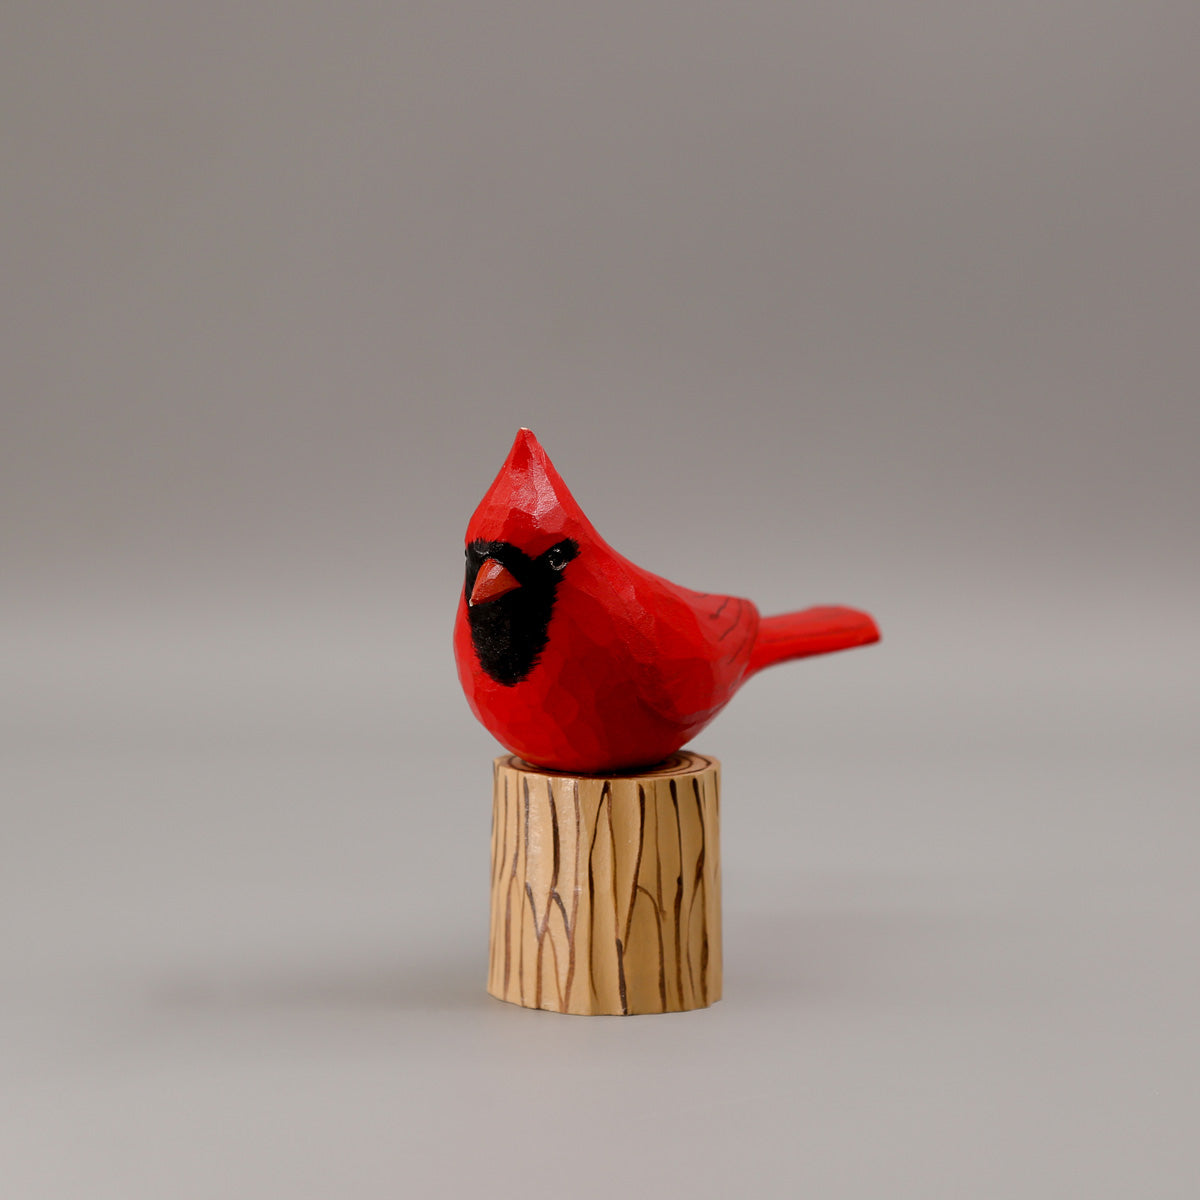 Male Cardinal + Stand